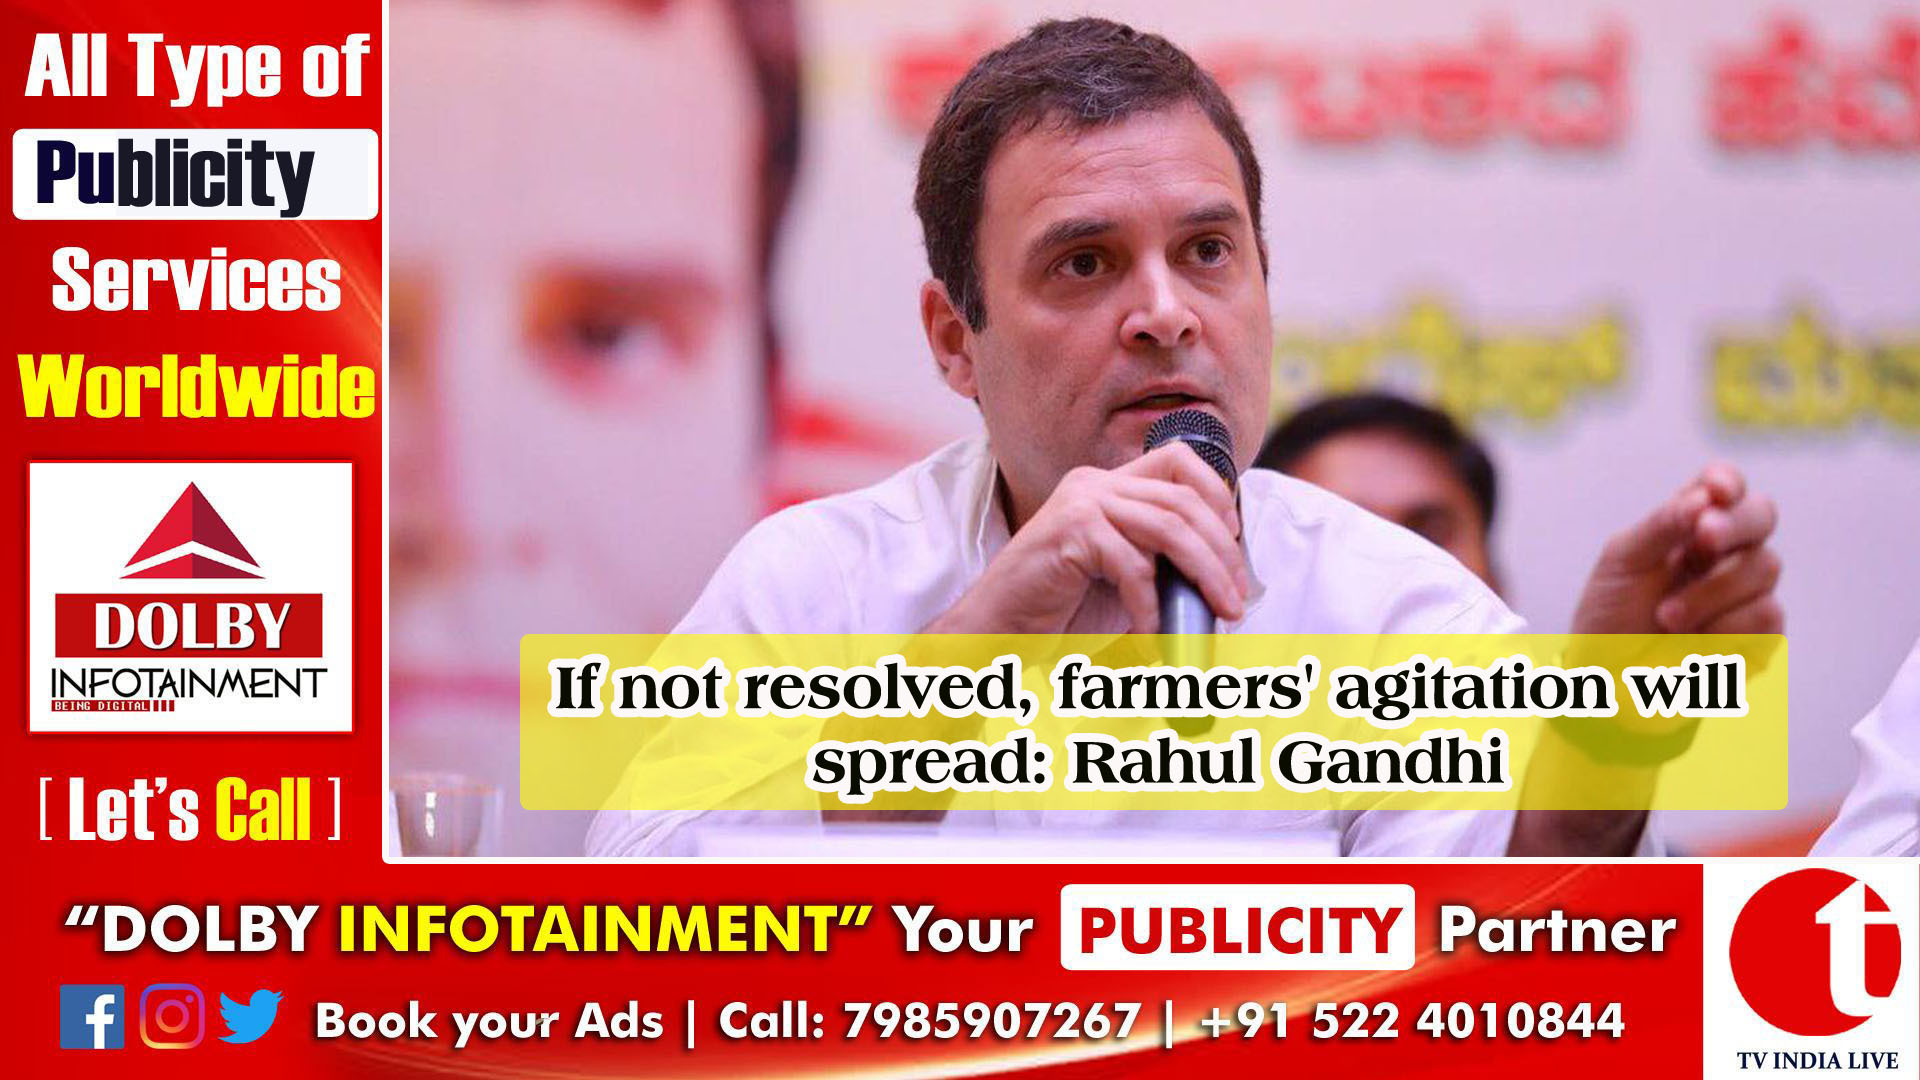 If not resolved, farmers' agitation will spread: Rahul Gandhi